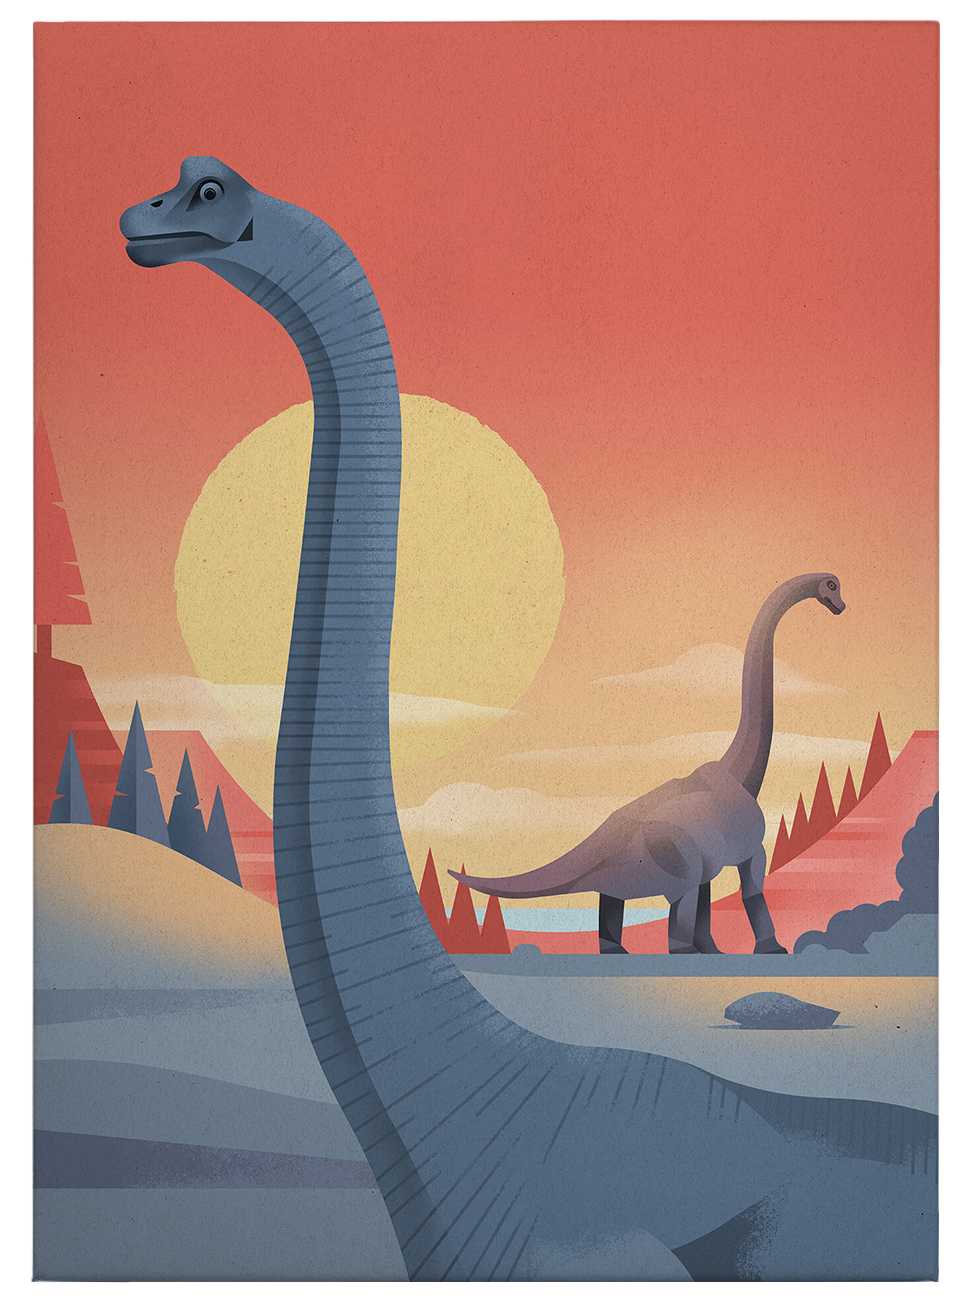             Cuadro Dinosaurios al amanecer - 0,50 m x 0,70 m
        